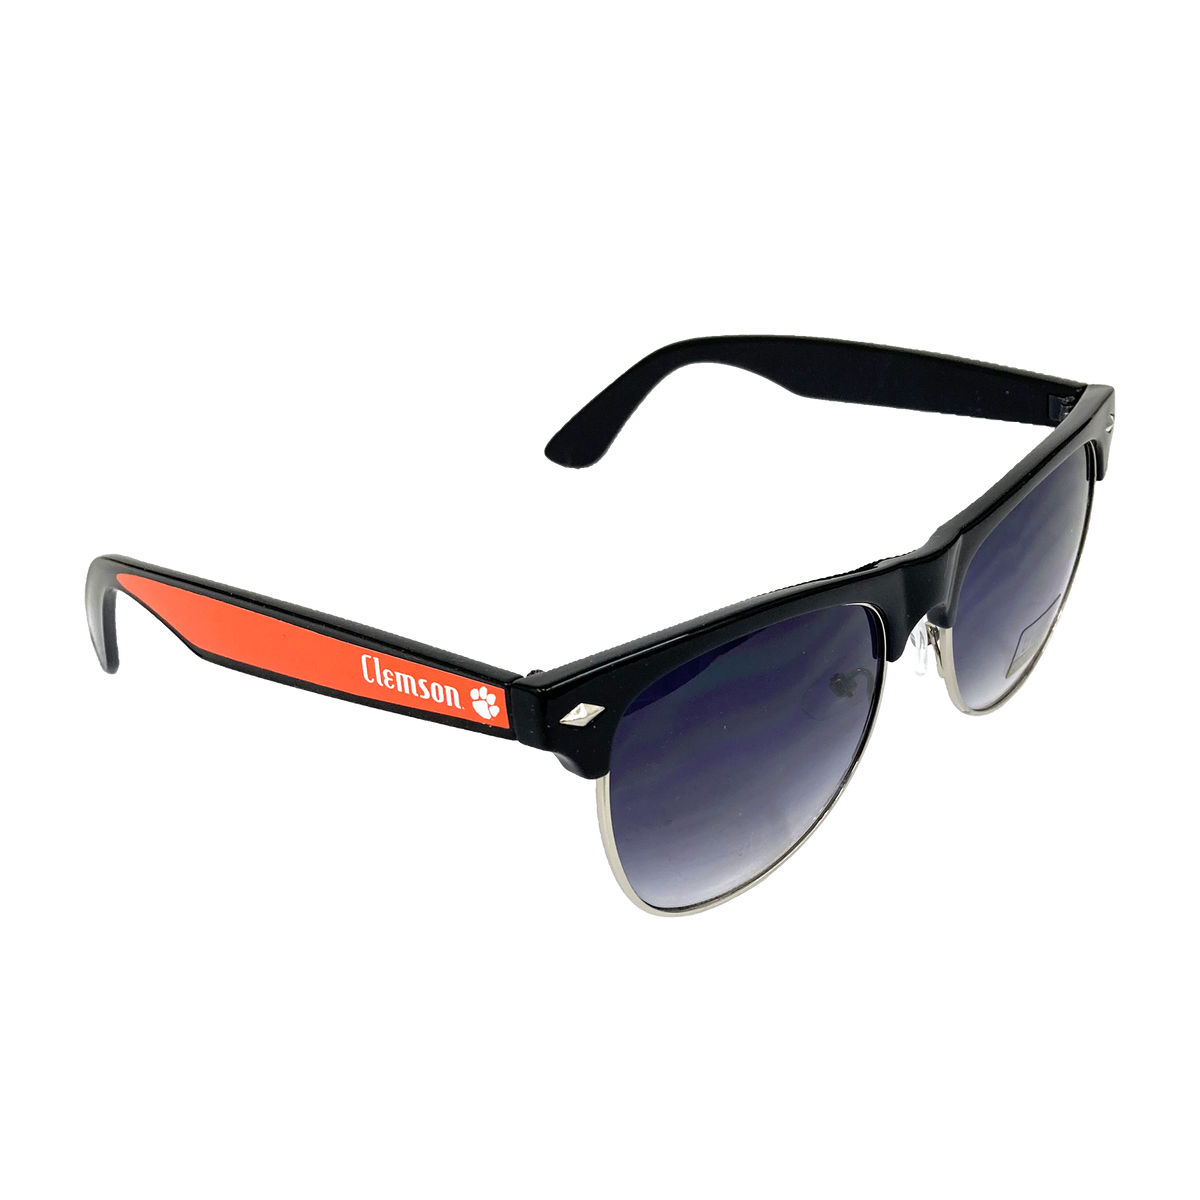 Clemson Club Master Sunglasses